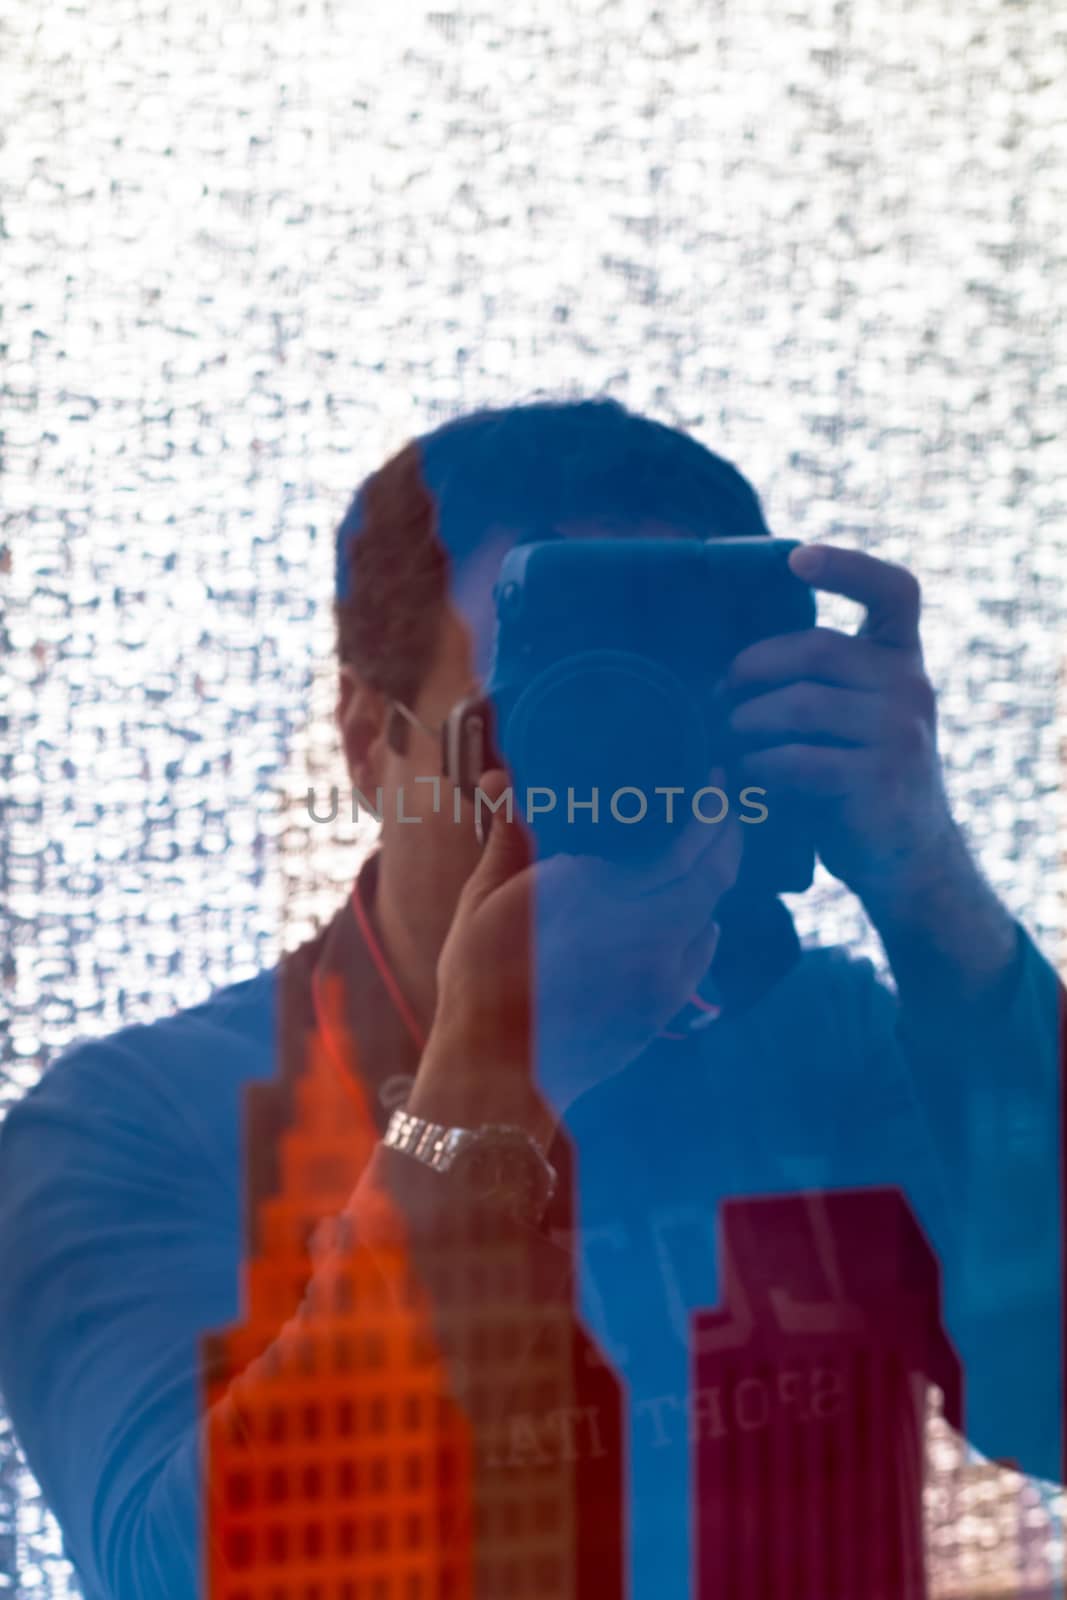 Photographer reflection